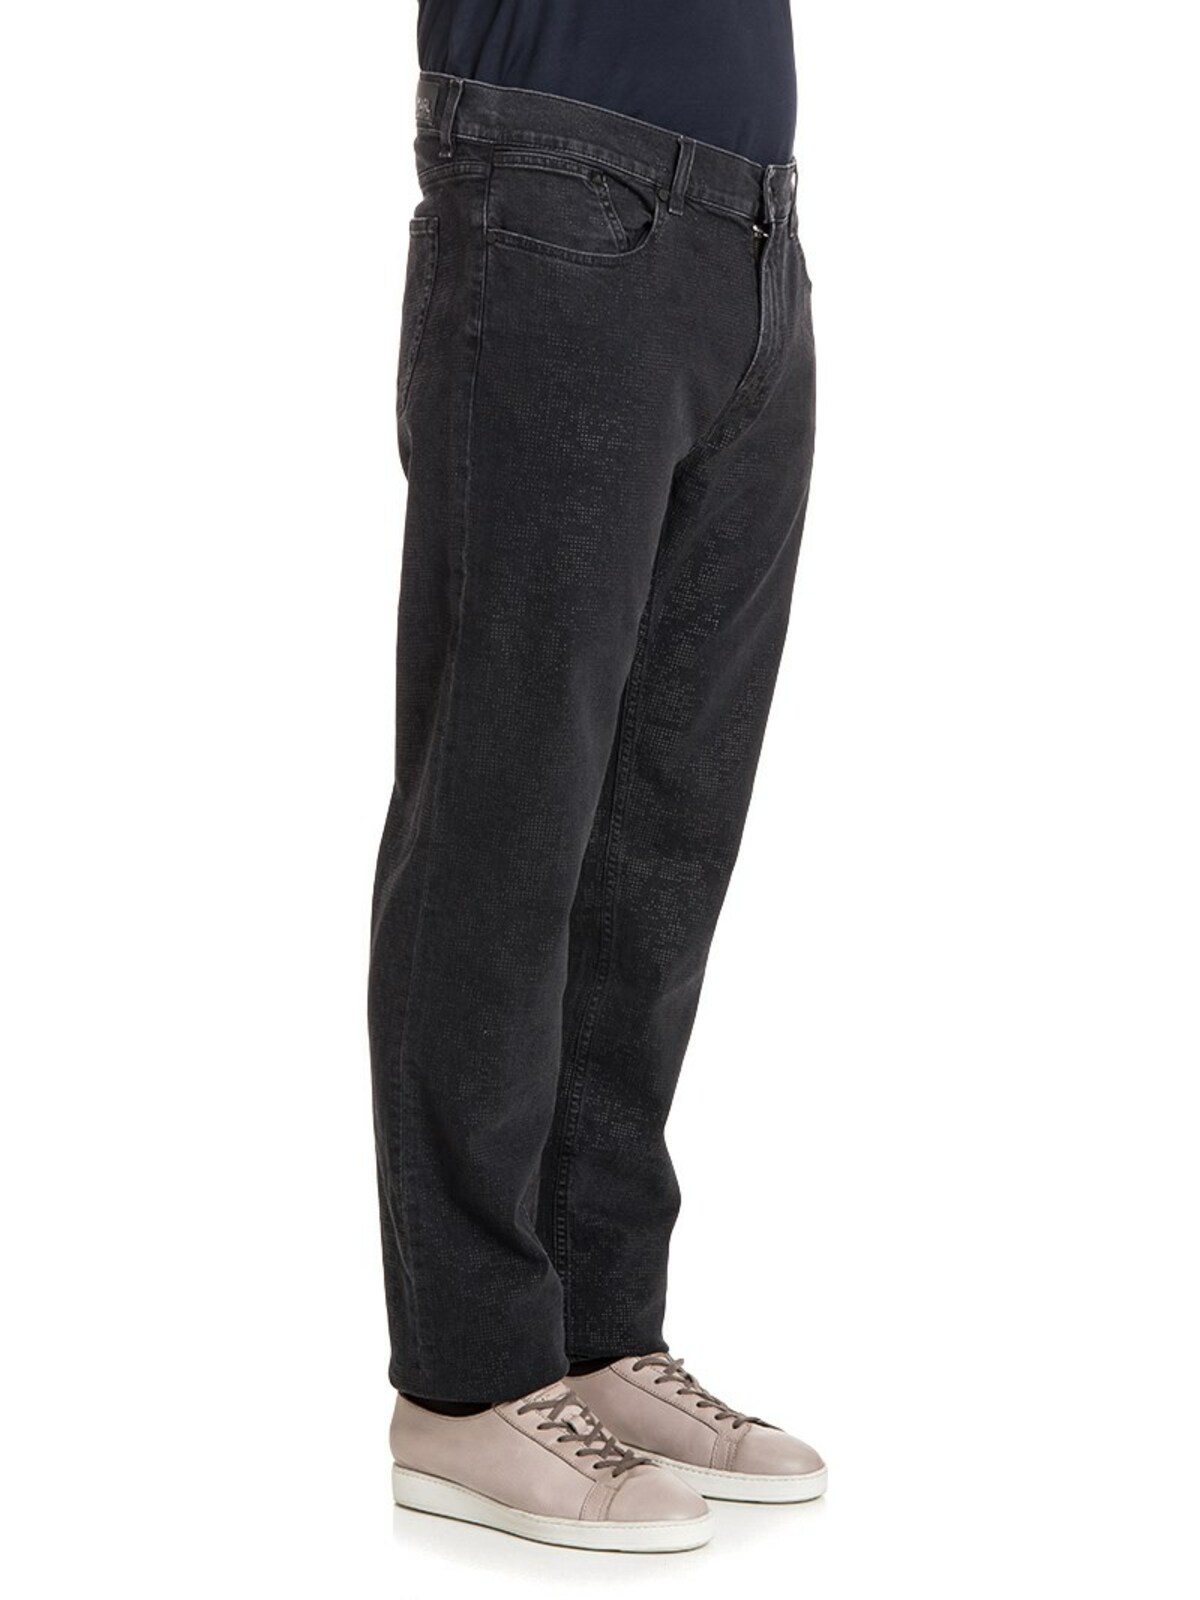 Karl Lagerfeld Black Denim Pull On Jeggings Ankle Stretch Jeans Pants ~ S  M3020